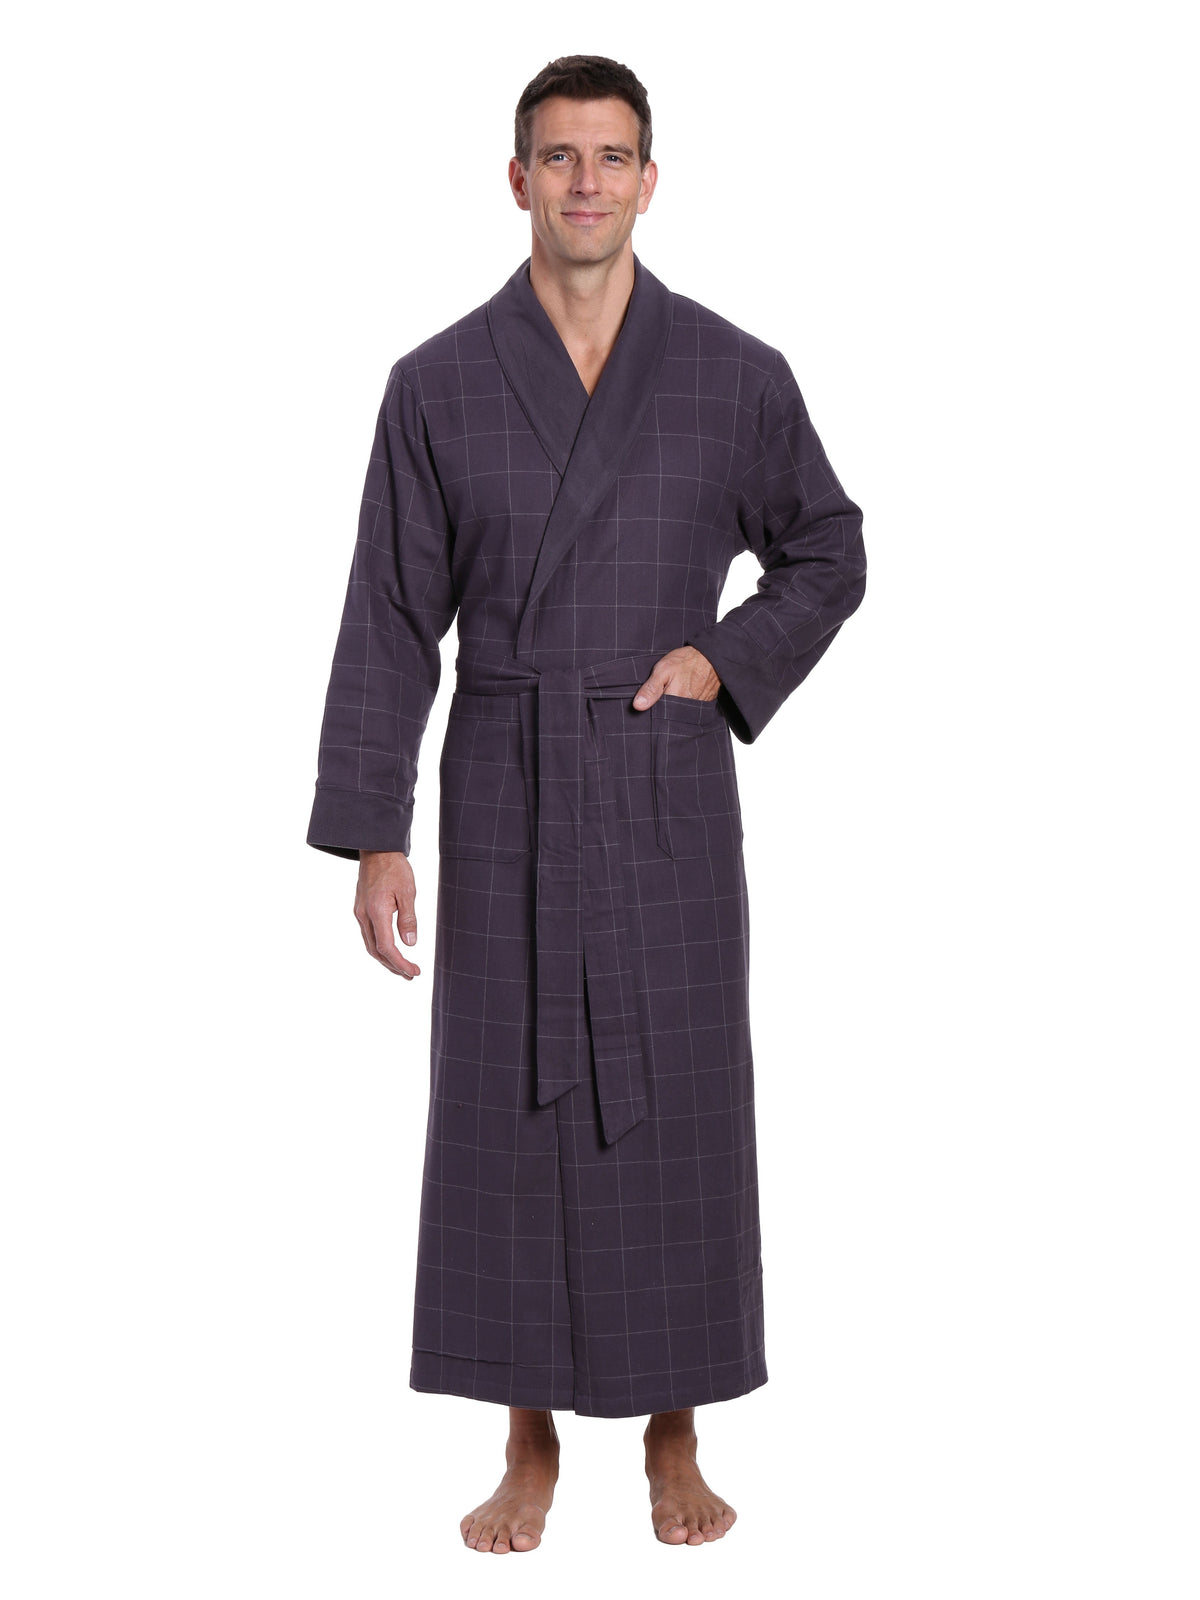 Men's Premium 100% Cotton Flannel Fleece Lined Robe - Windowpane Checks - Iron